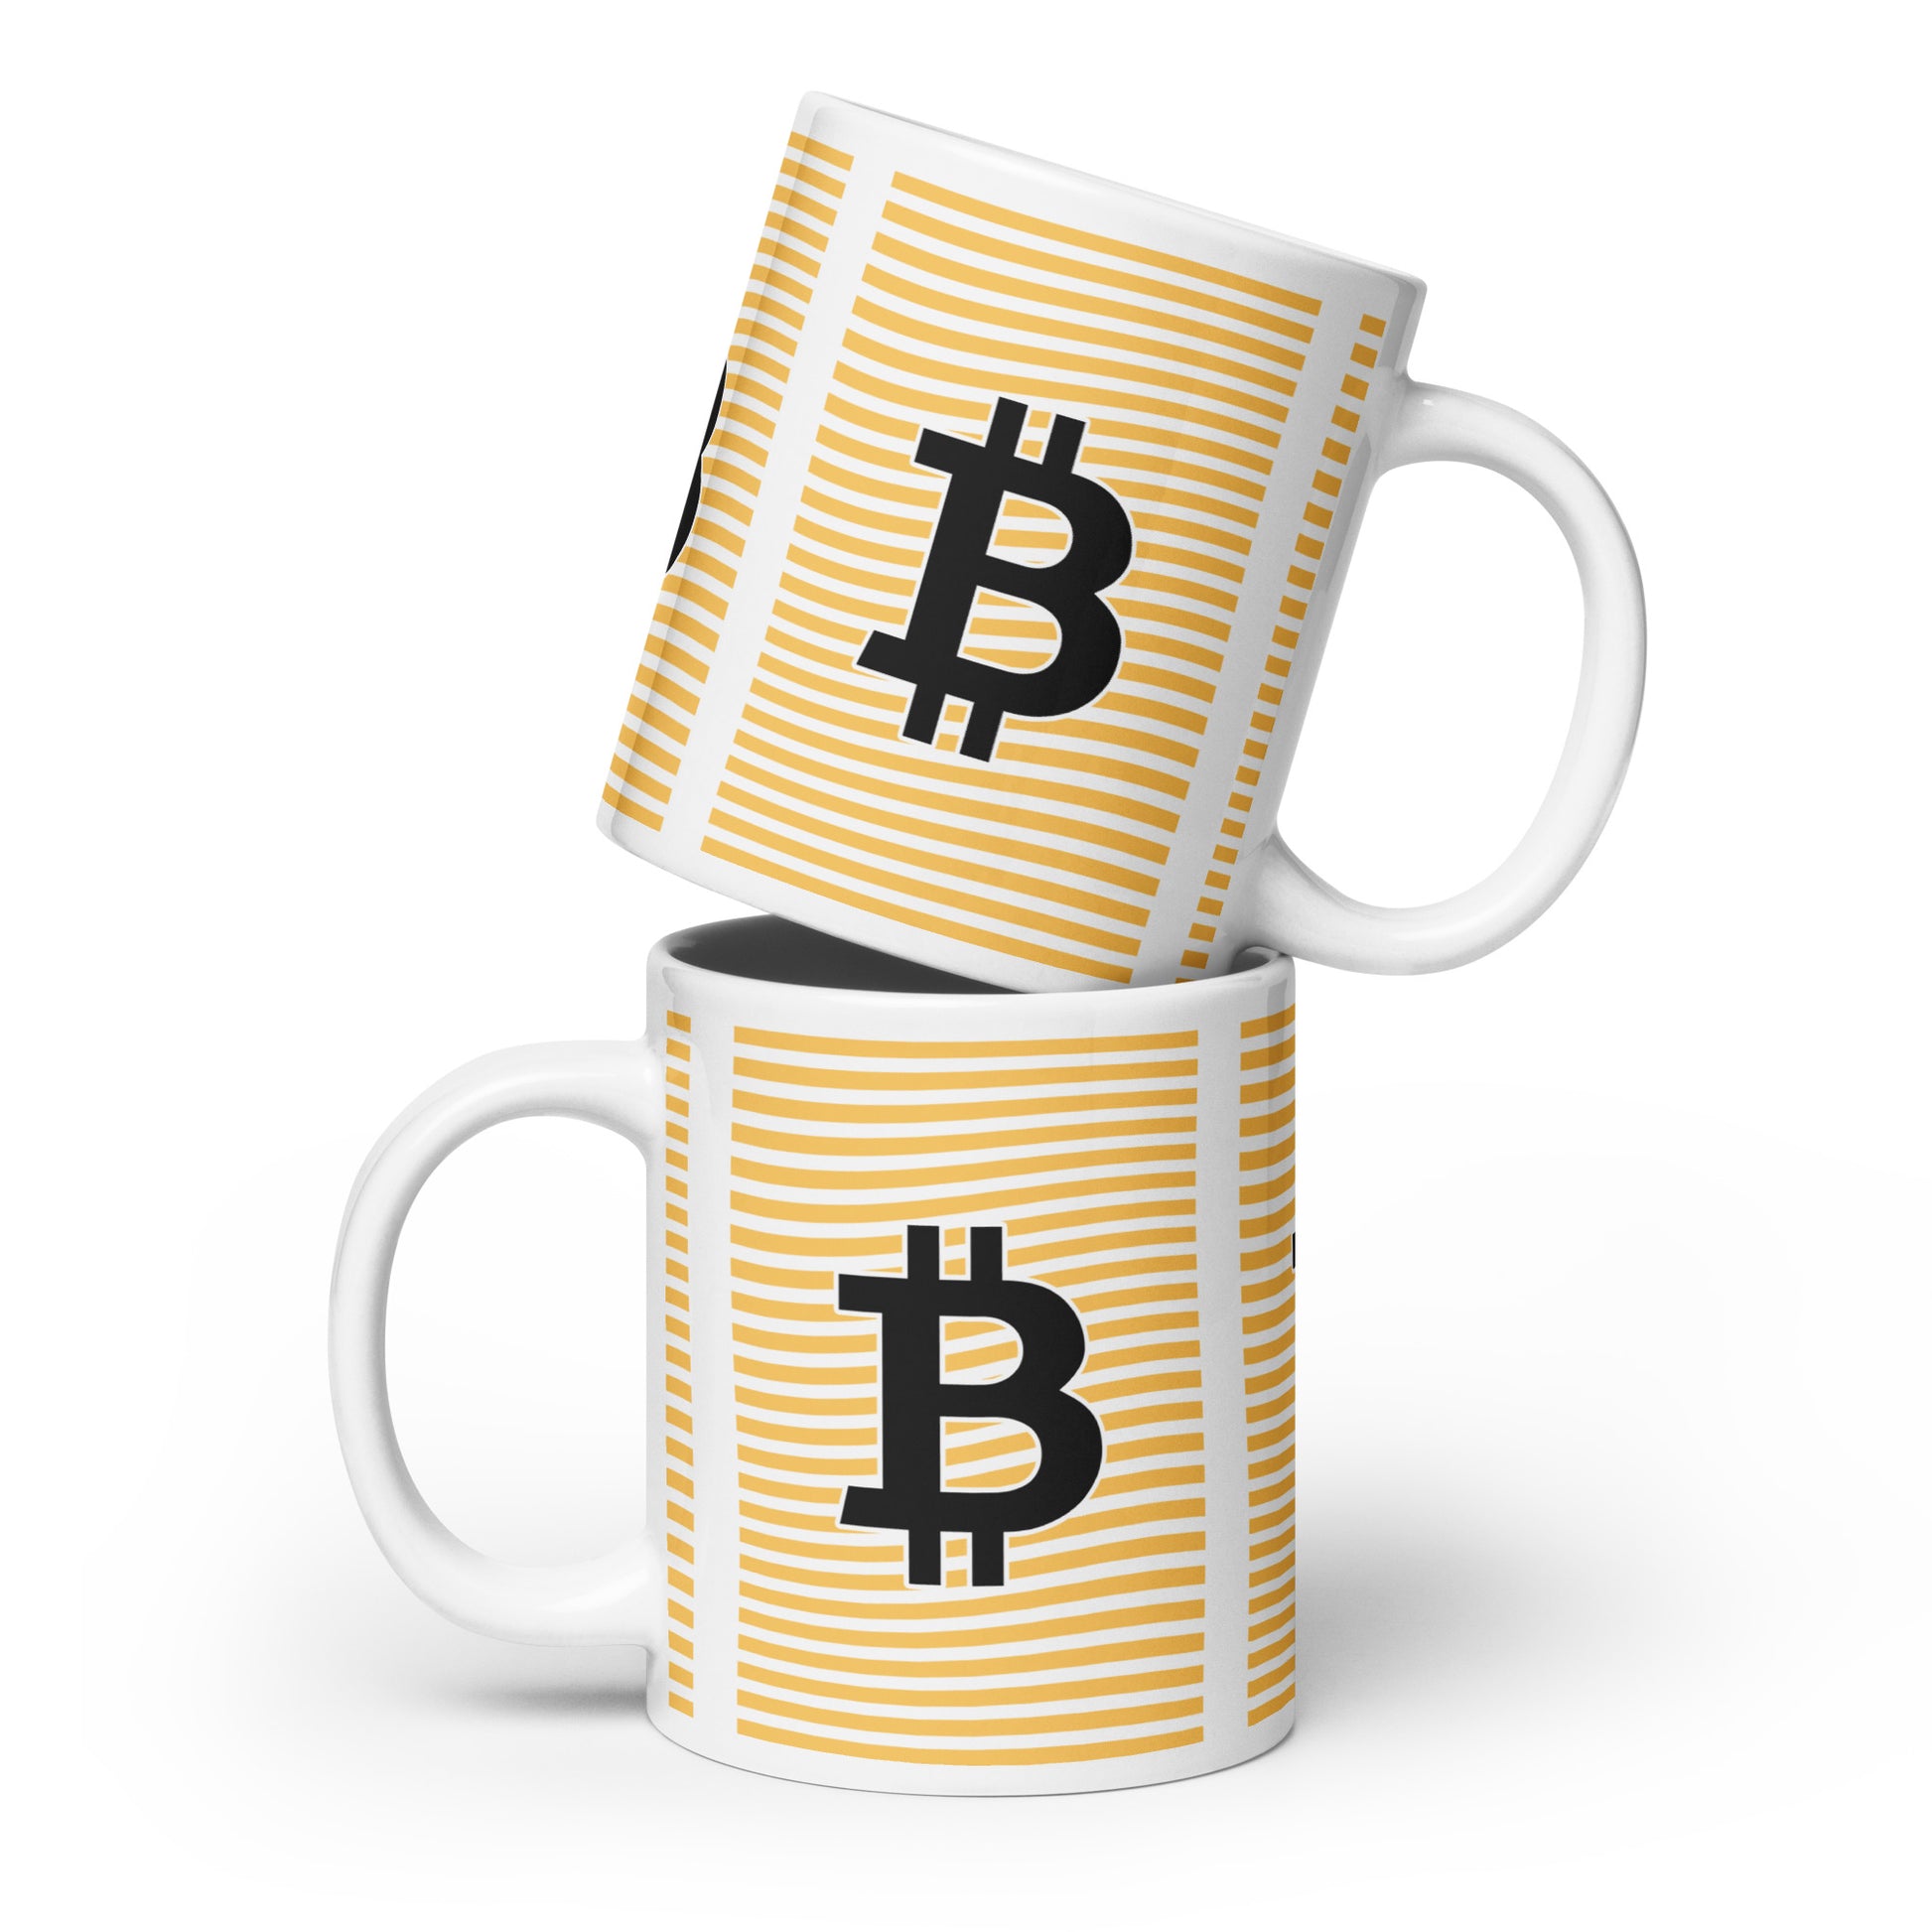 Bitcoin White glossy mug - Hodlers Crypto Merch Brand